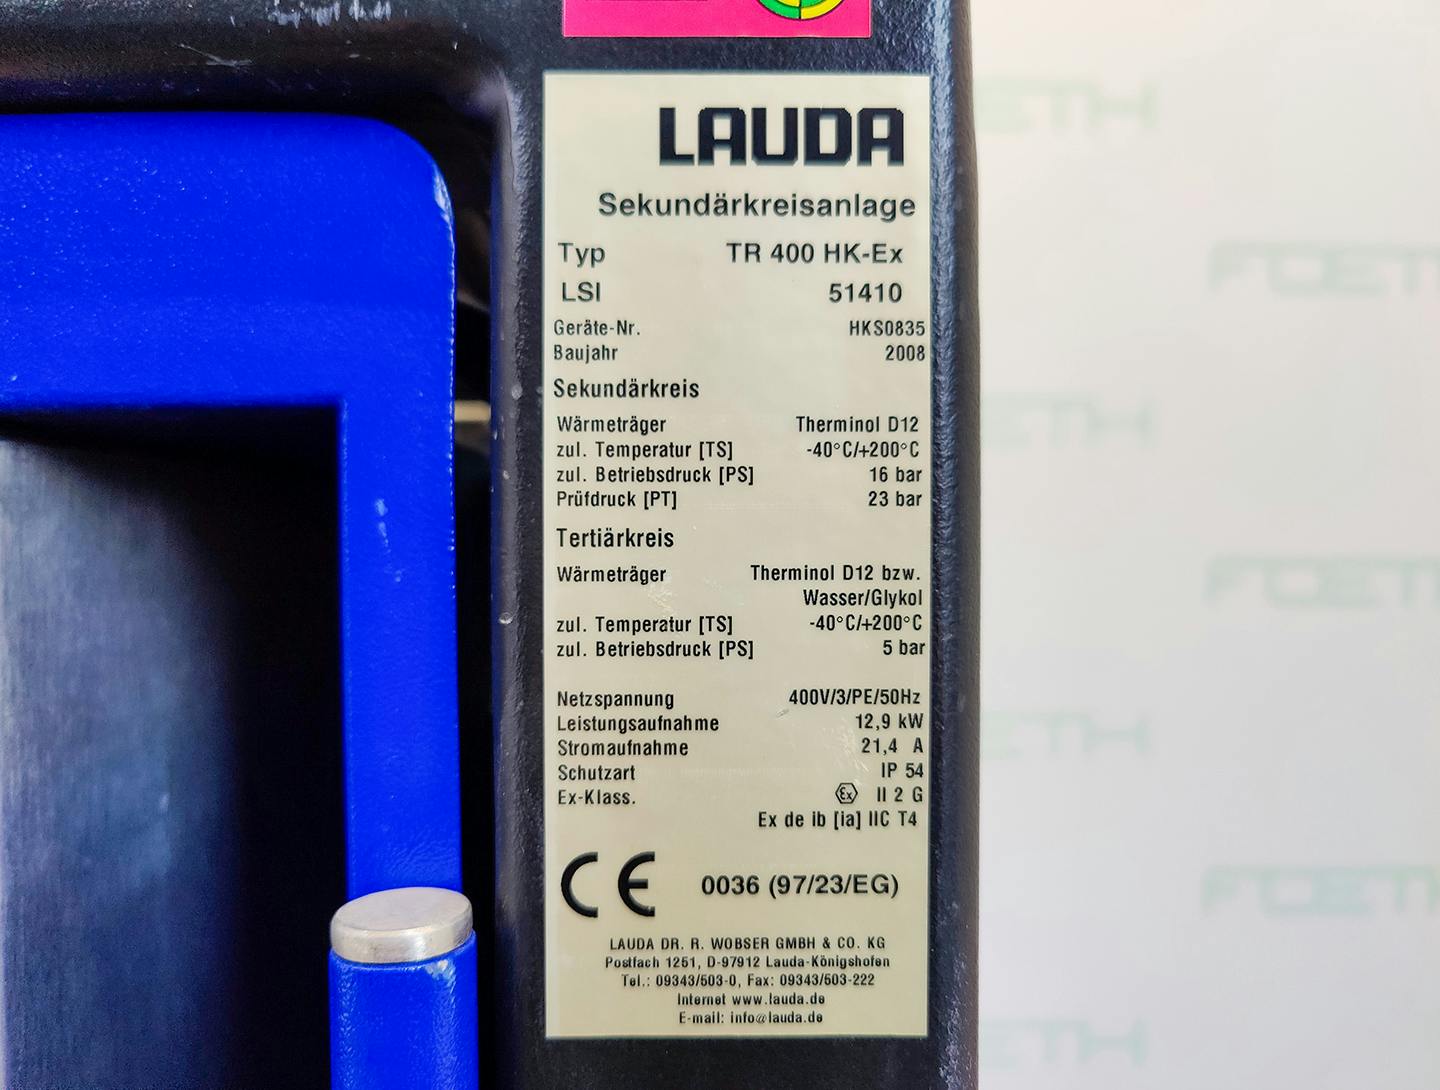 Lauda TR400 HK-EX "secondary circuit system" - Temperiergerät - image 7